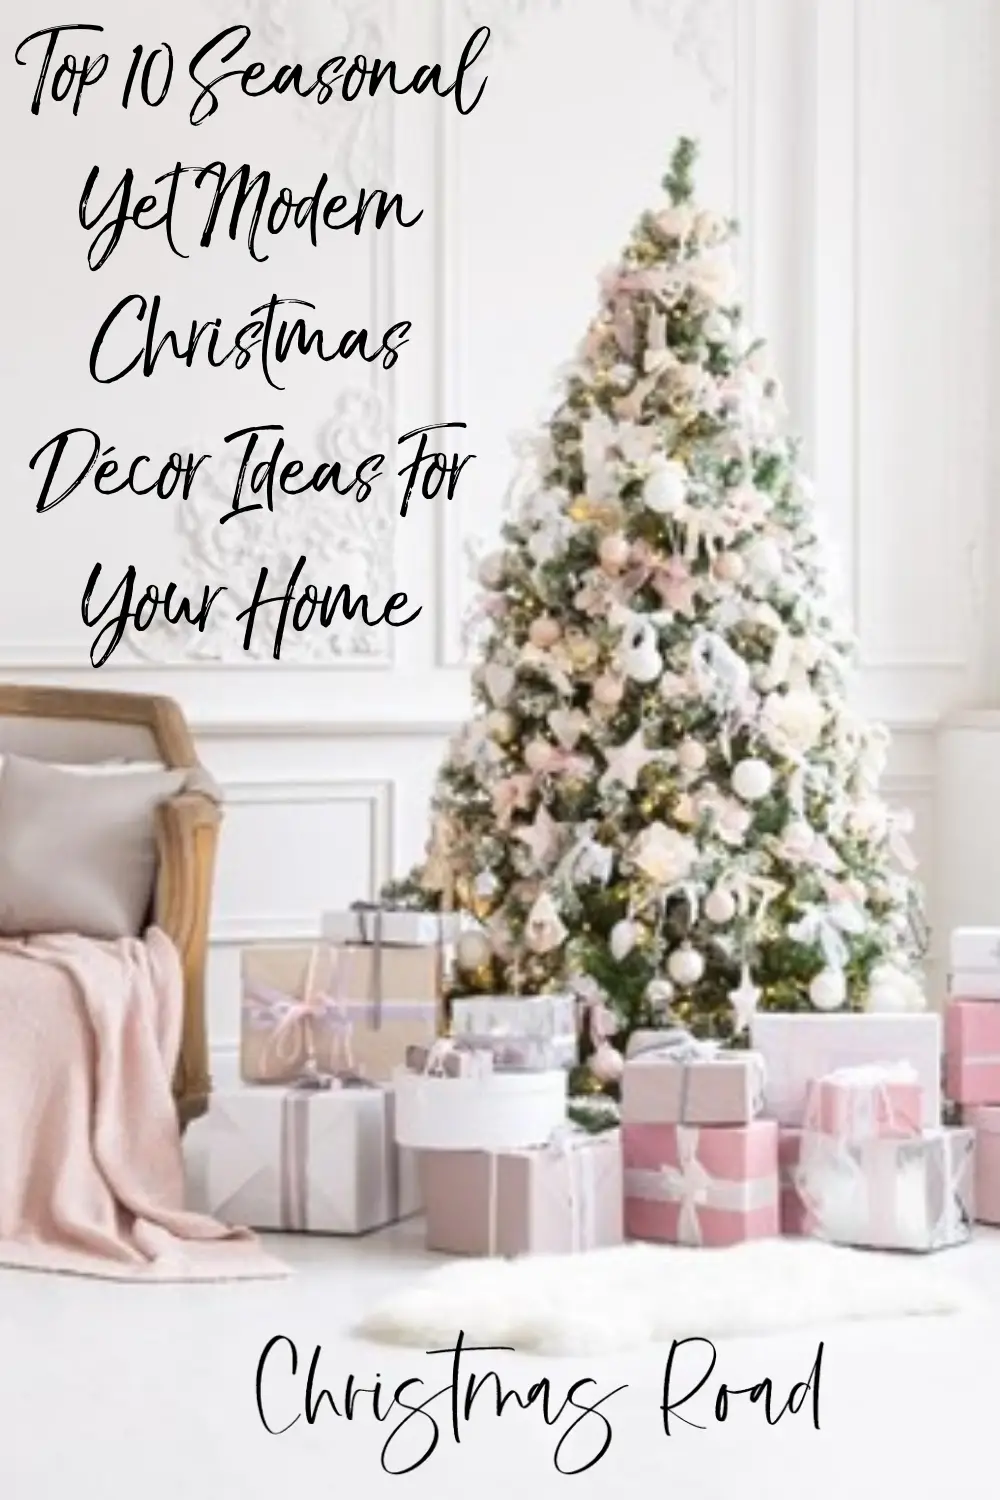 Top 10 Seasonal Yet Modern Christmas Decor Ideas For Your Home